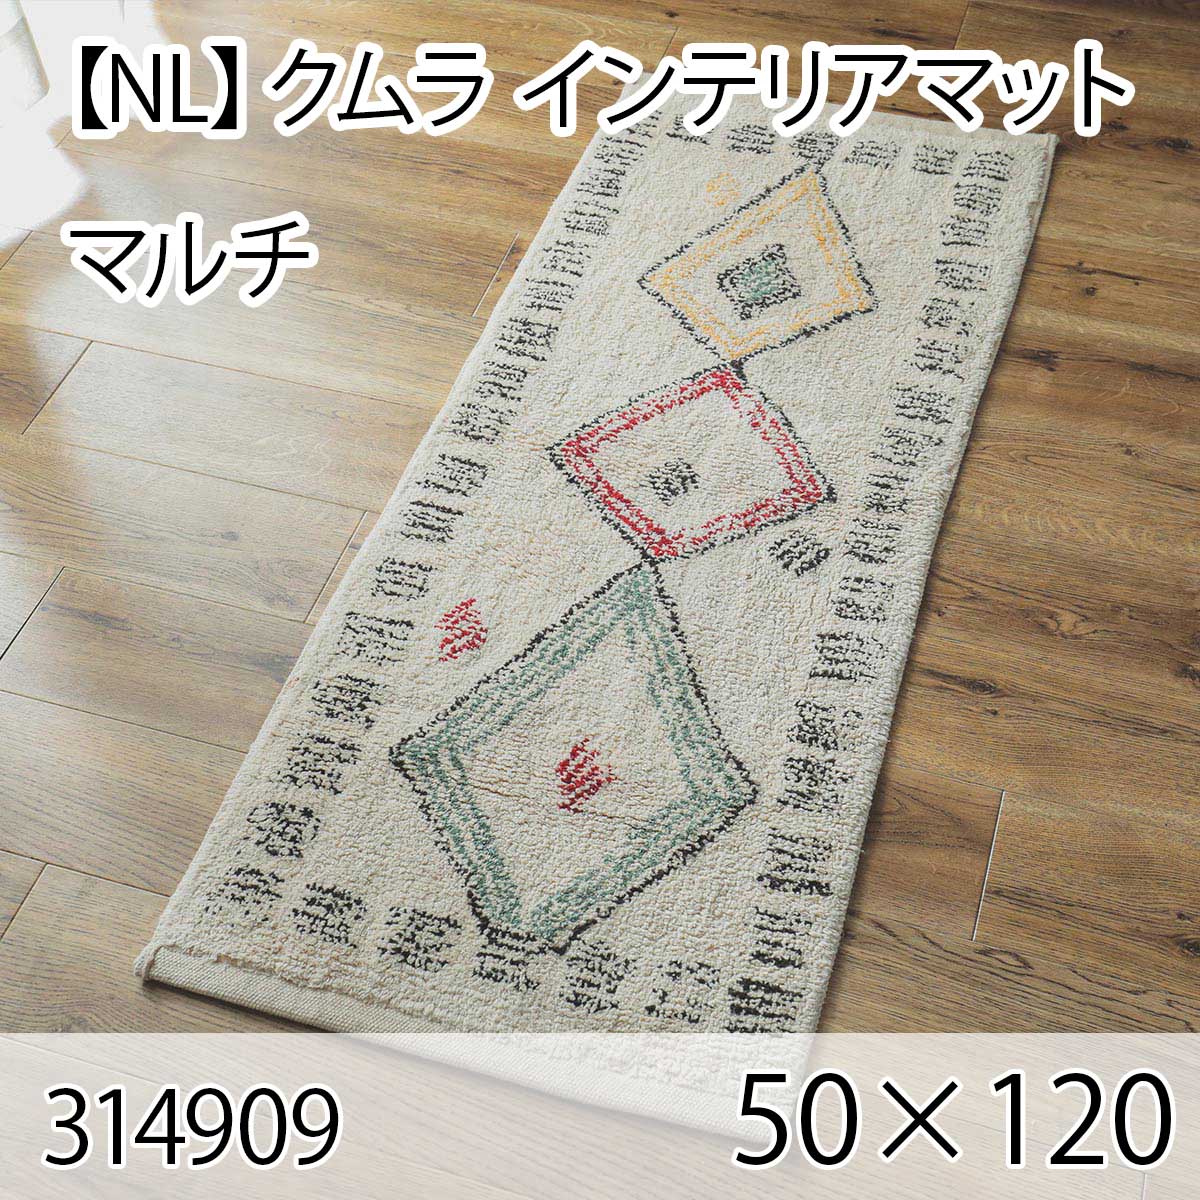 【NL】クムラ インテリアマット 50cmx120cm マルチ